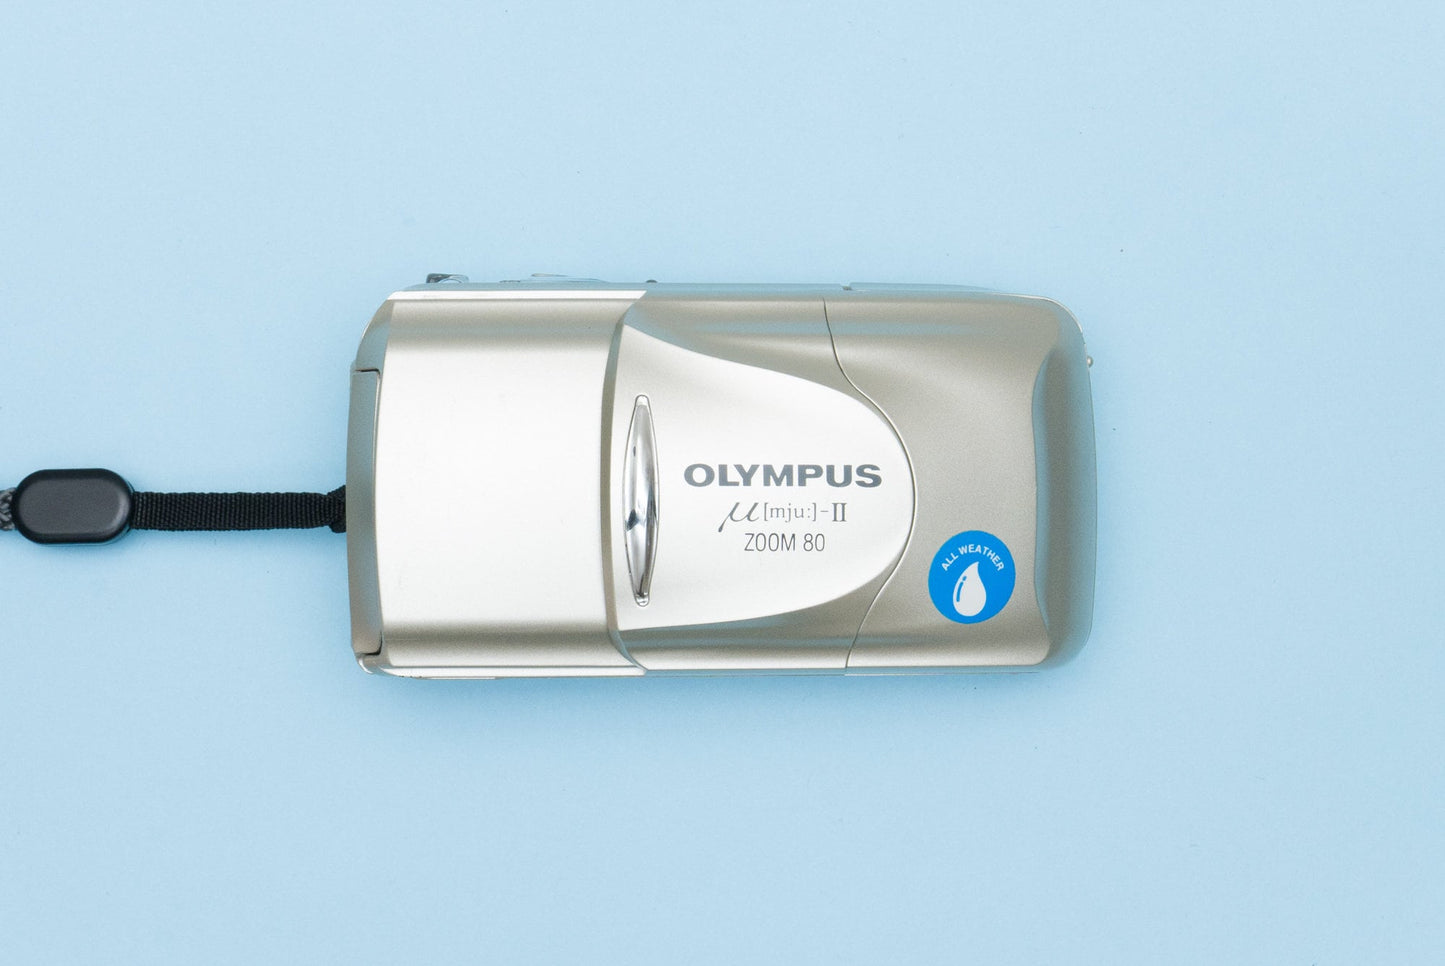 Olympus µ[mju:] Mju II Zoom 80 Stylus Compact 35mm Film Camera